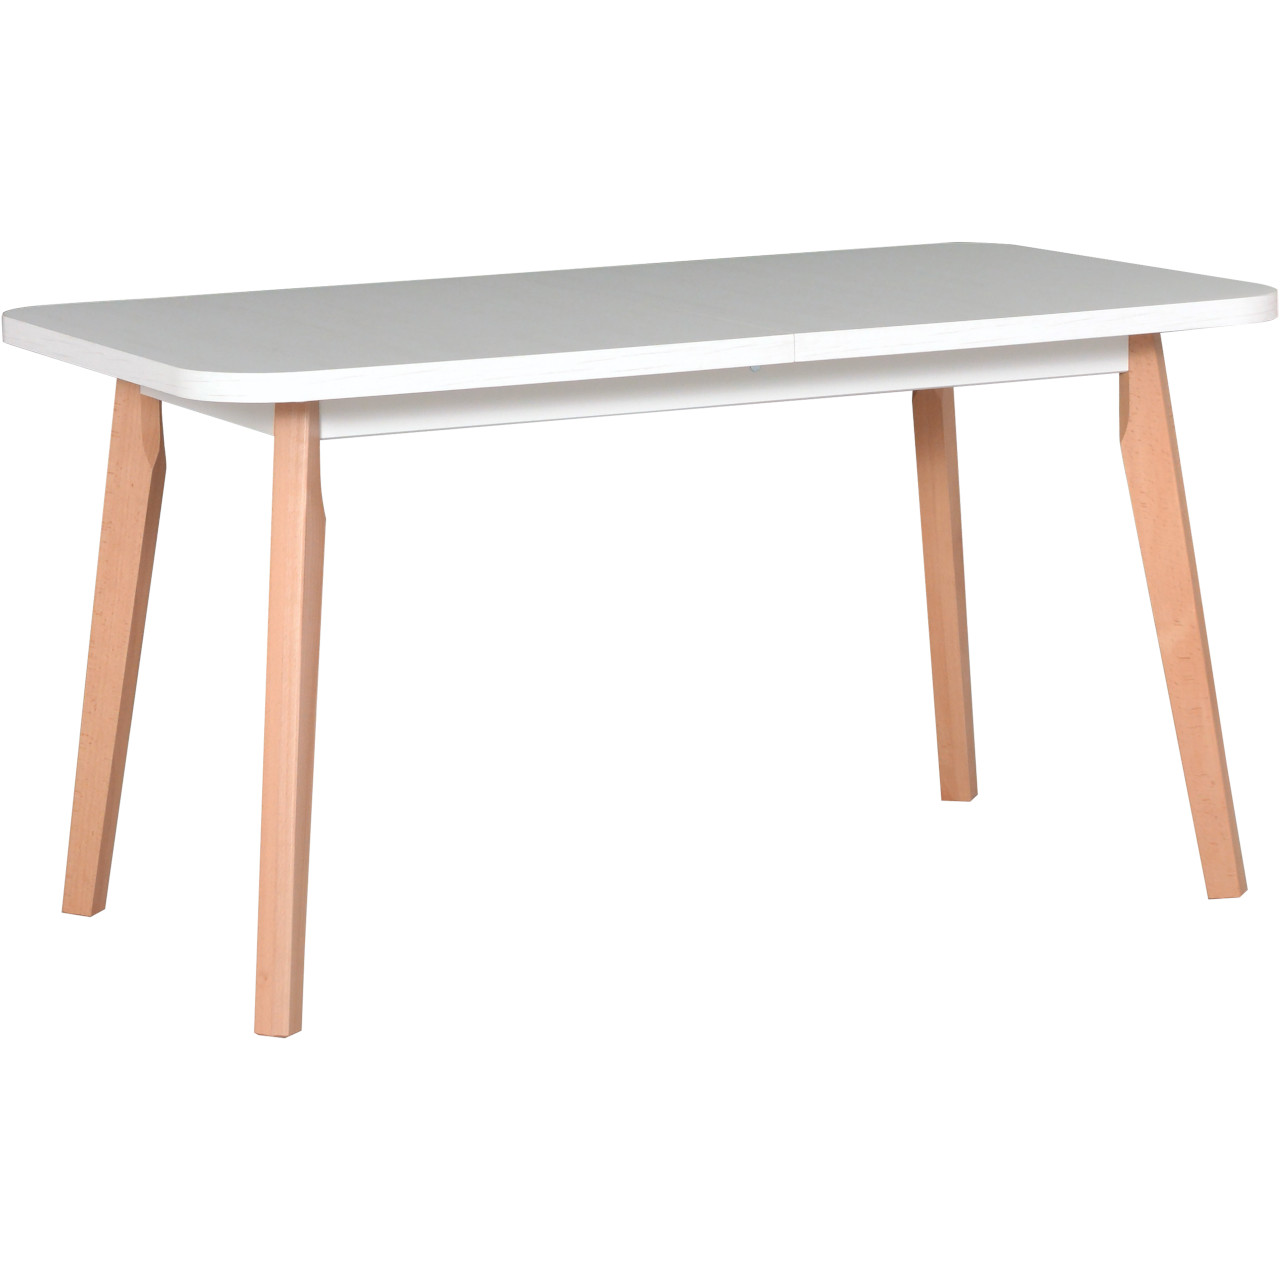 Table OSLO 6 80x140/180 white laminate / natural beech